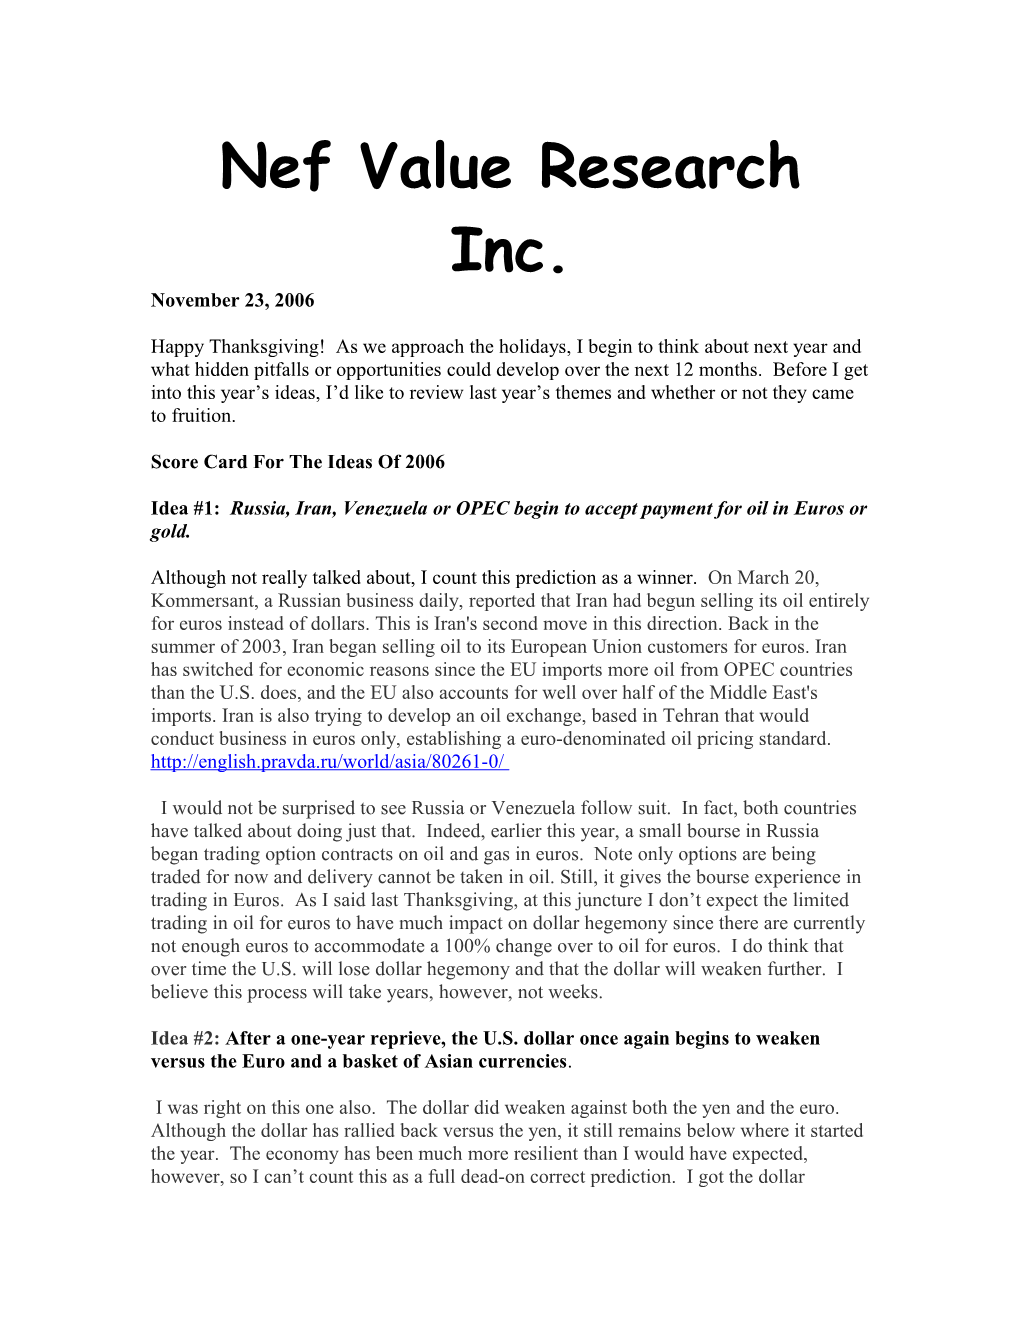 Nef Value Research Inc